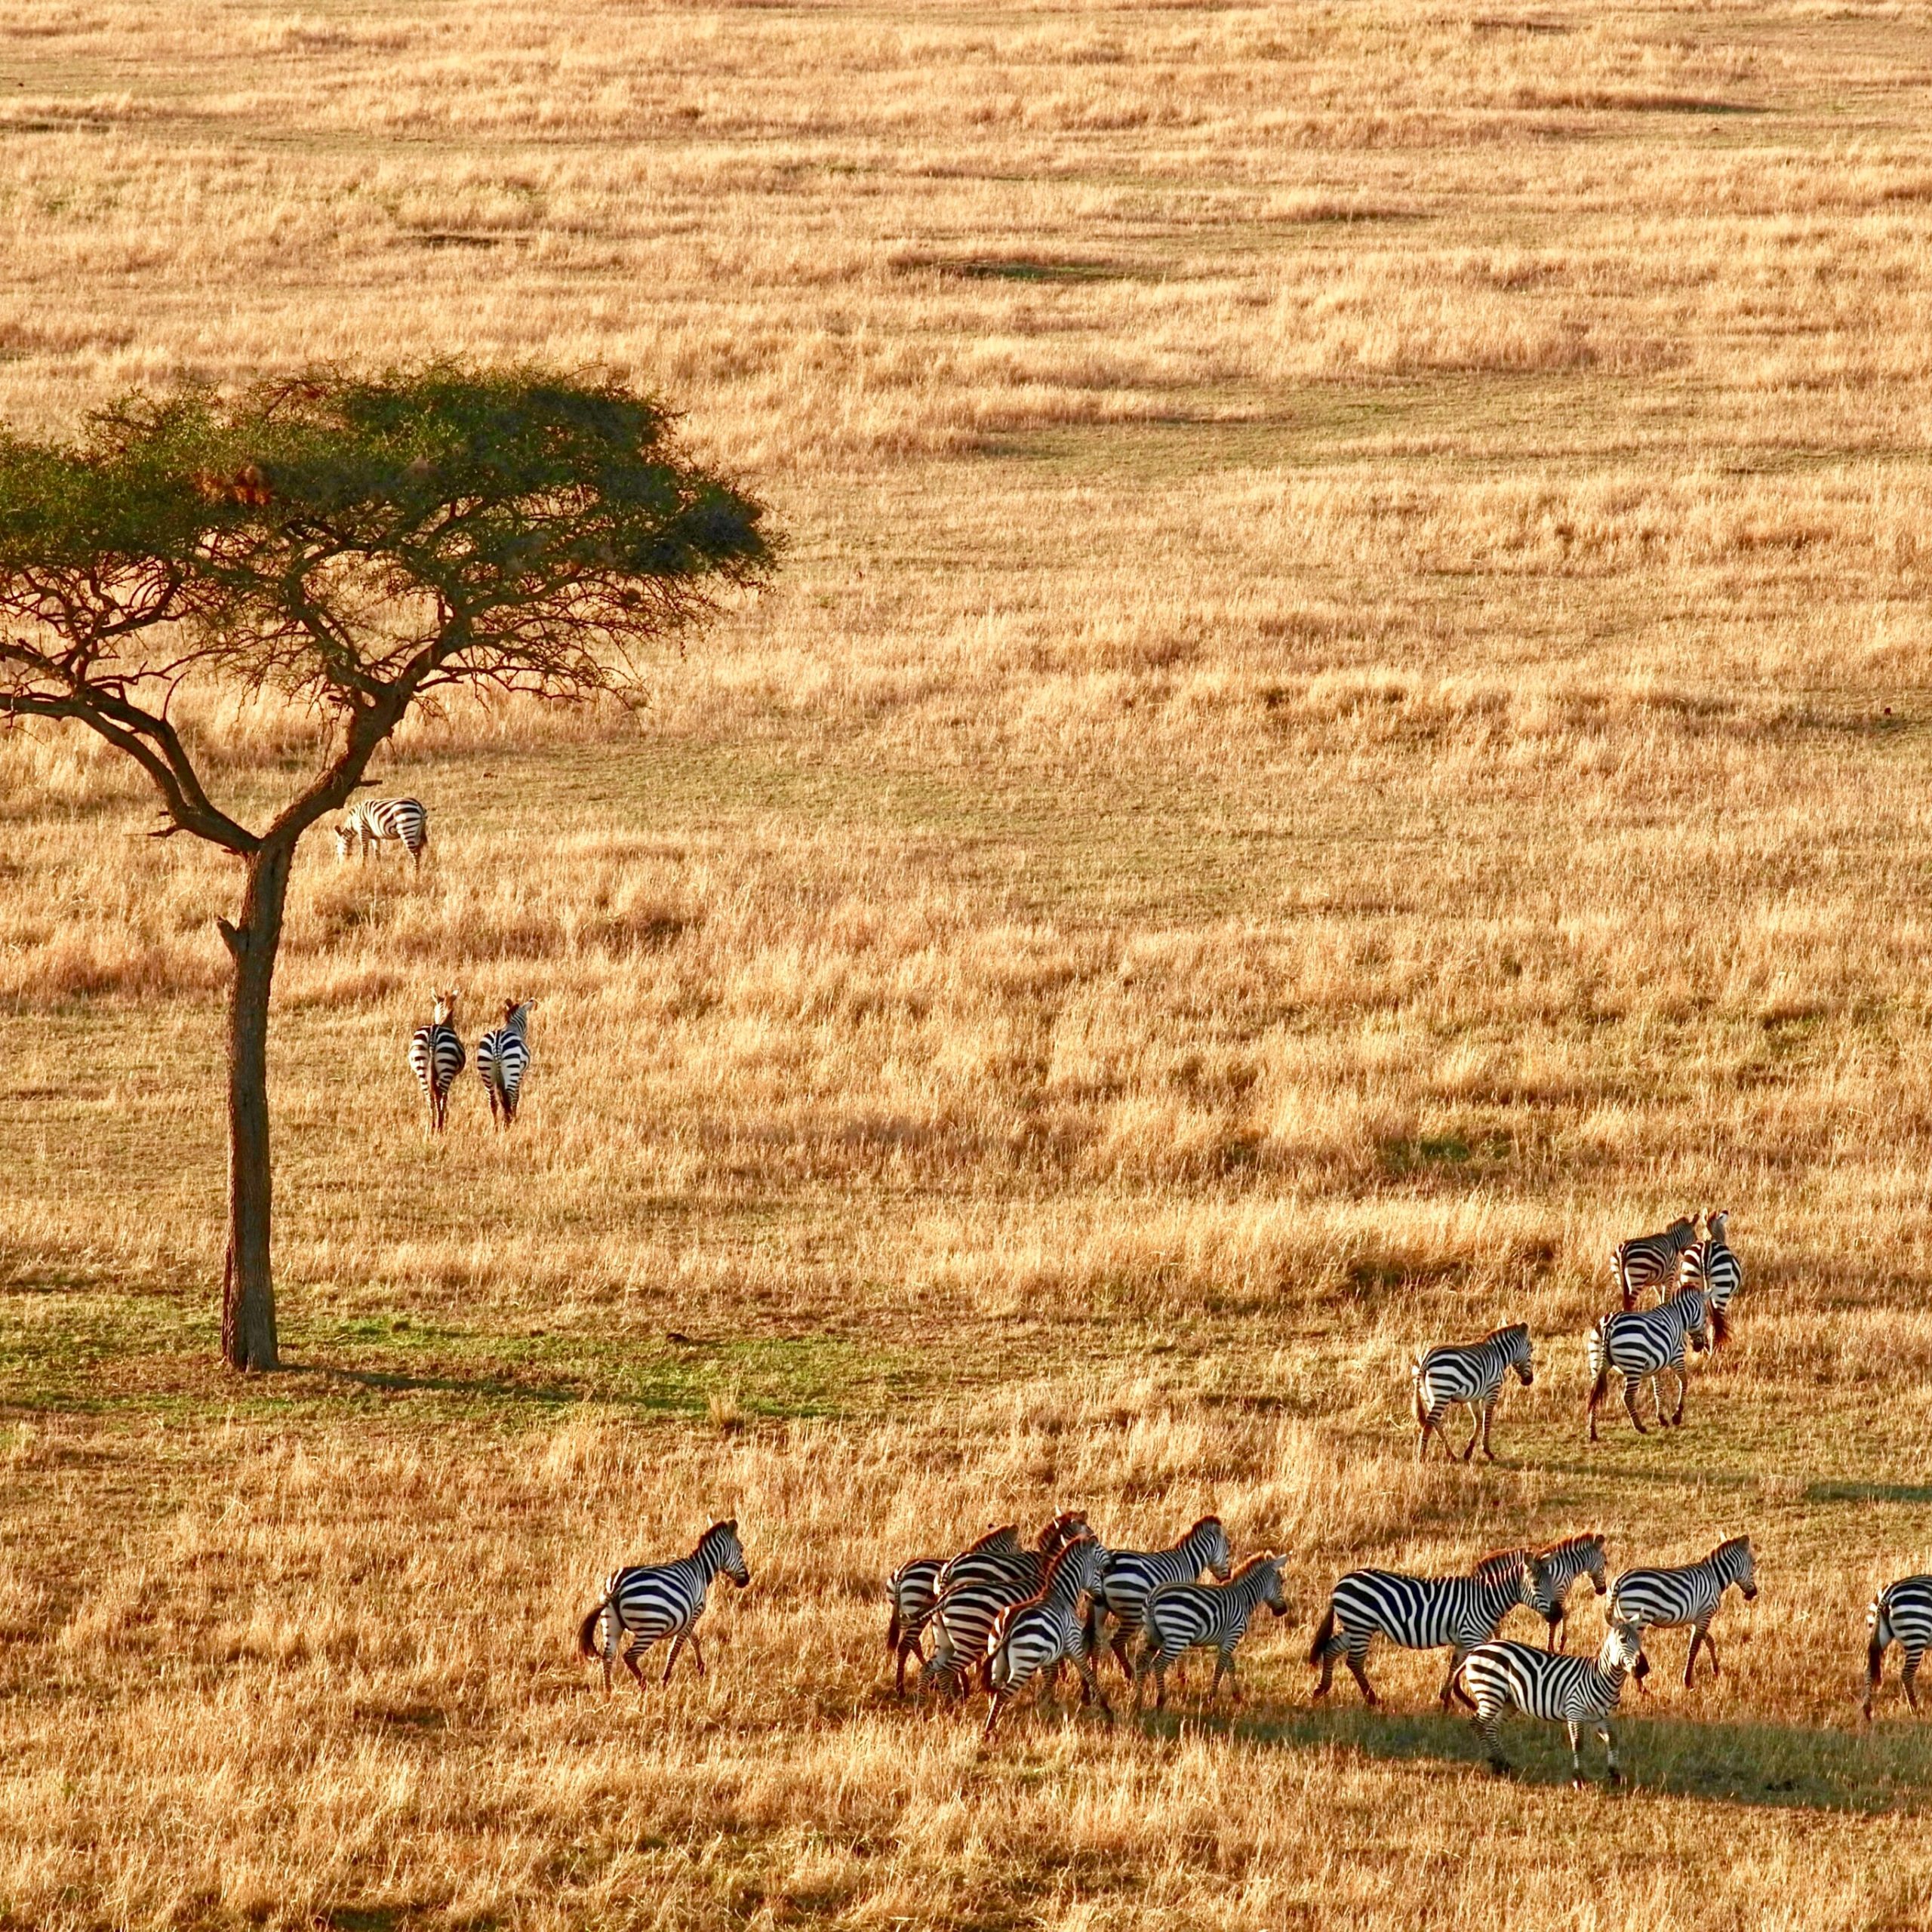 Day 9 : Serengeti National Park